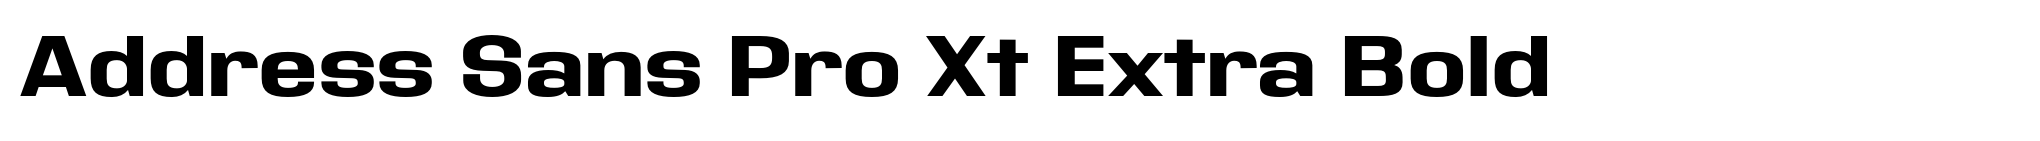 Address Sans Pro Xt Extra Bold image